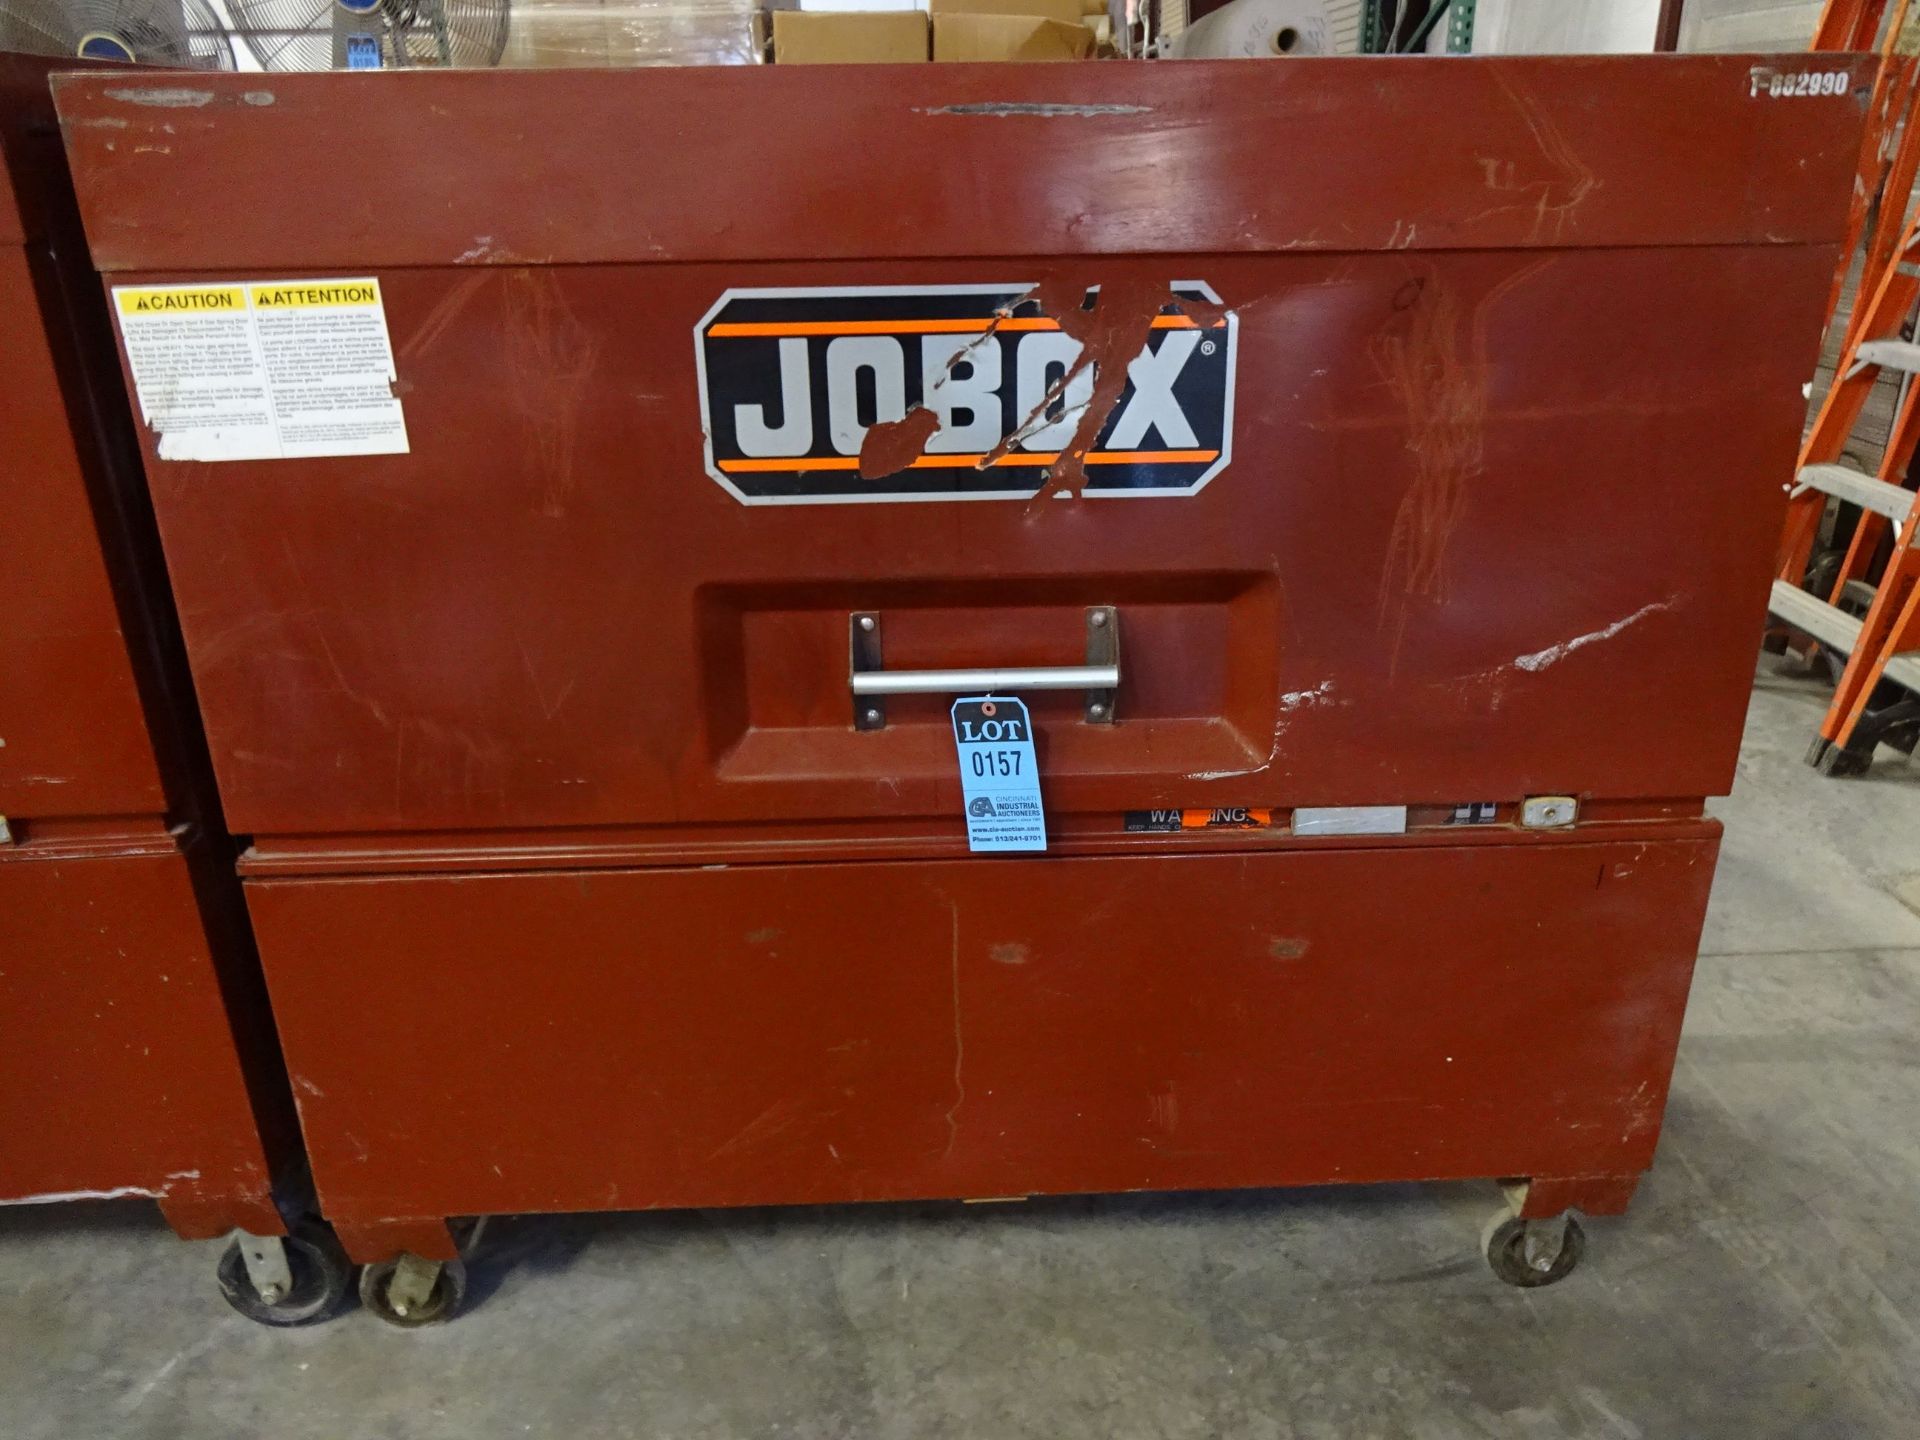 JOBOX MODEL 1-682990 PORTABLE JOB SITE GANG BOX WITH HARDWARE CONTENTS